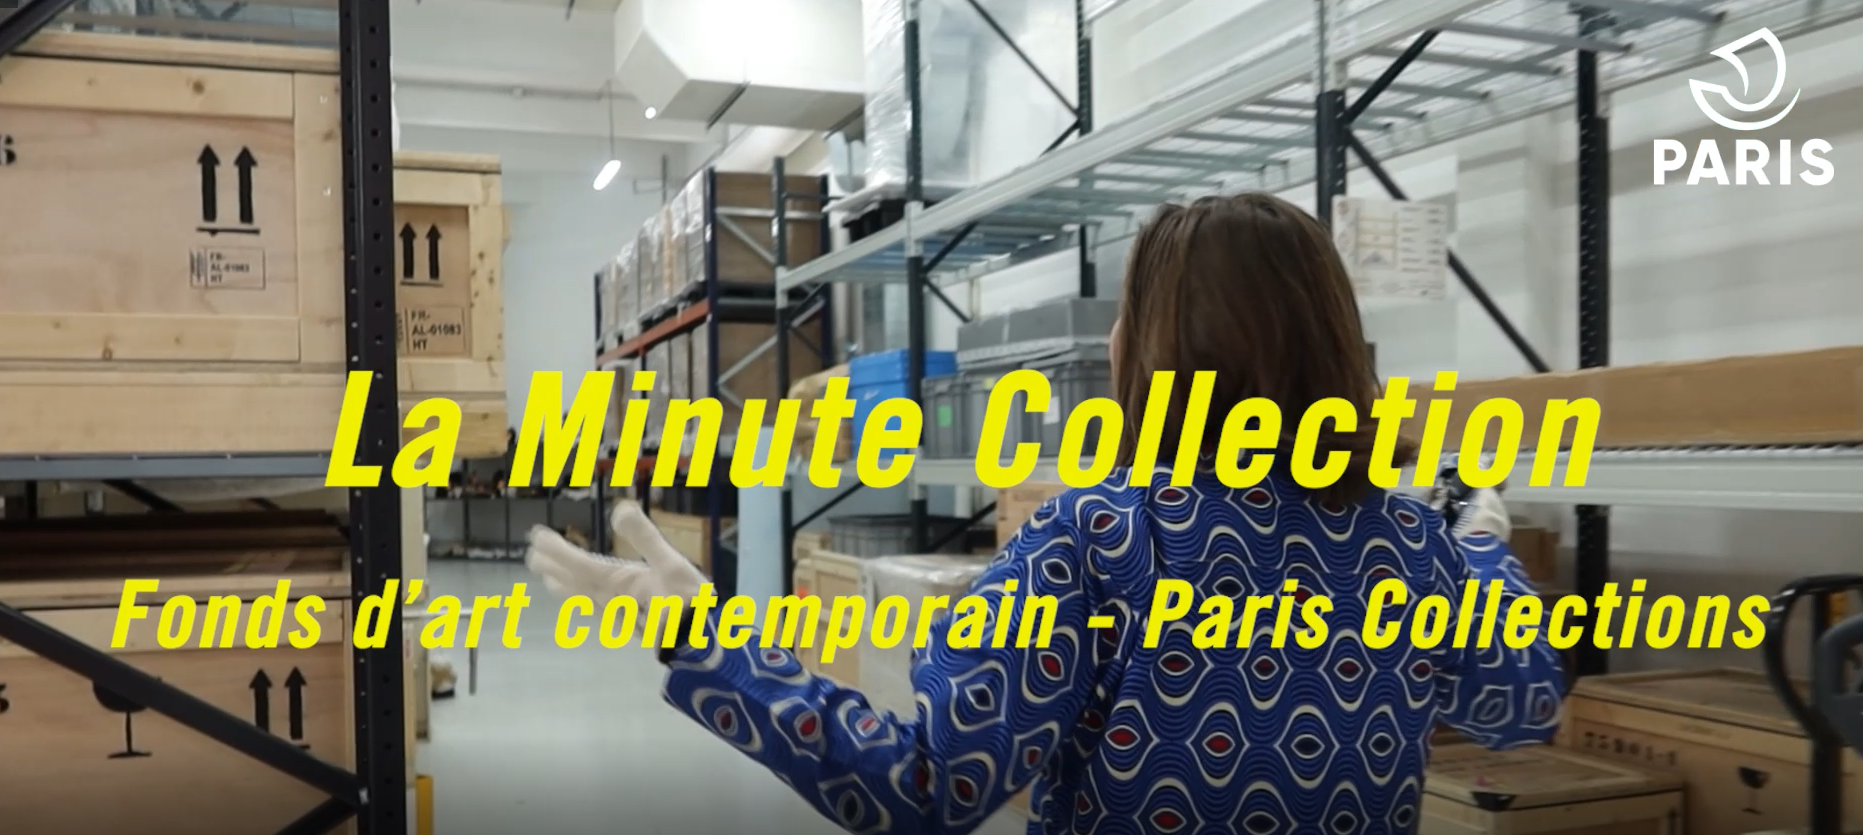 La Minute Collection